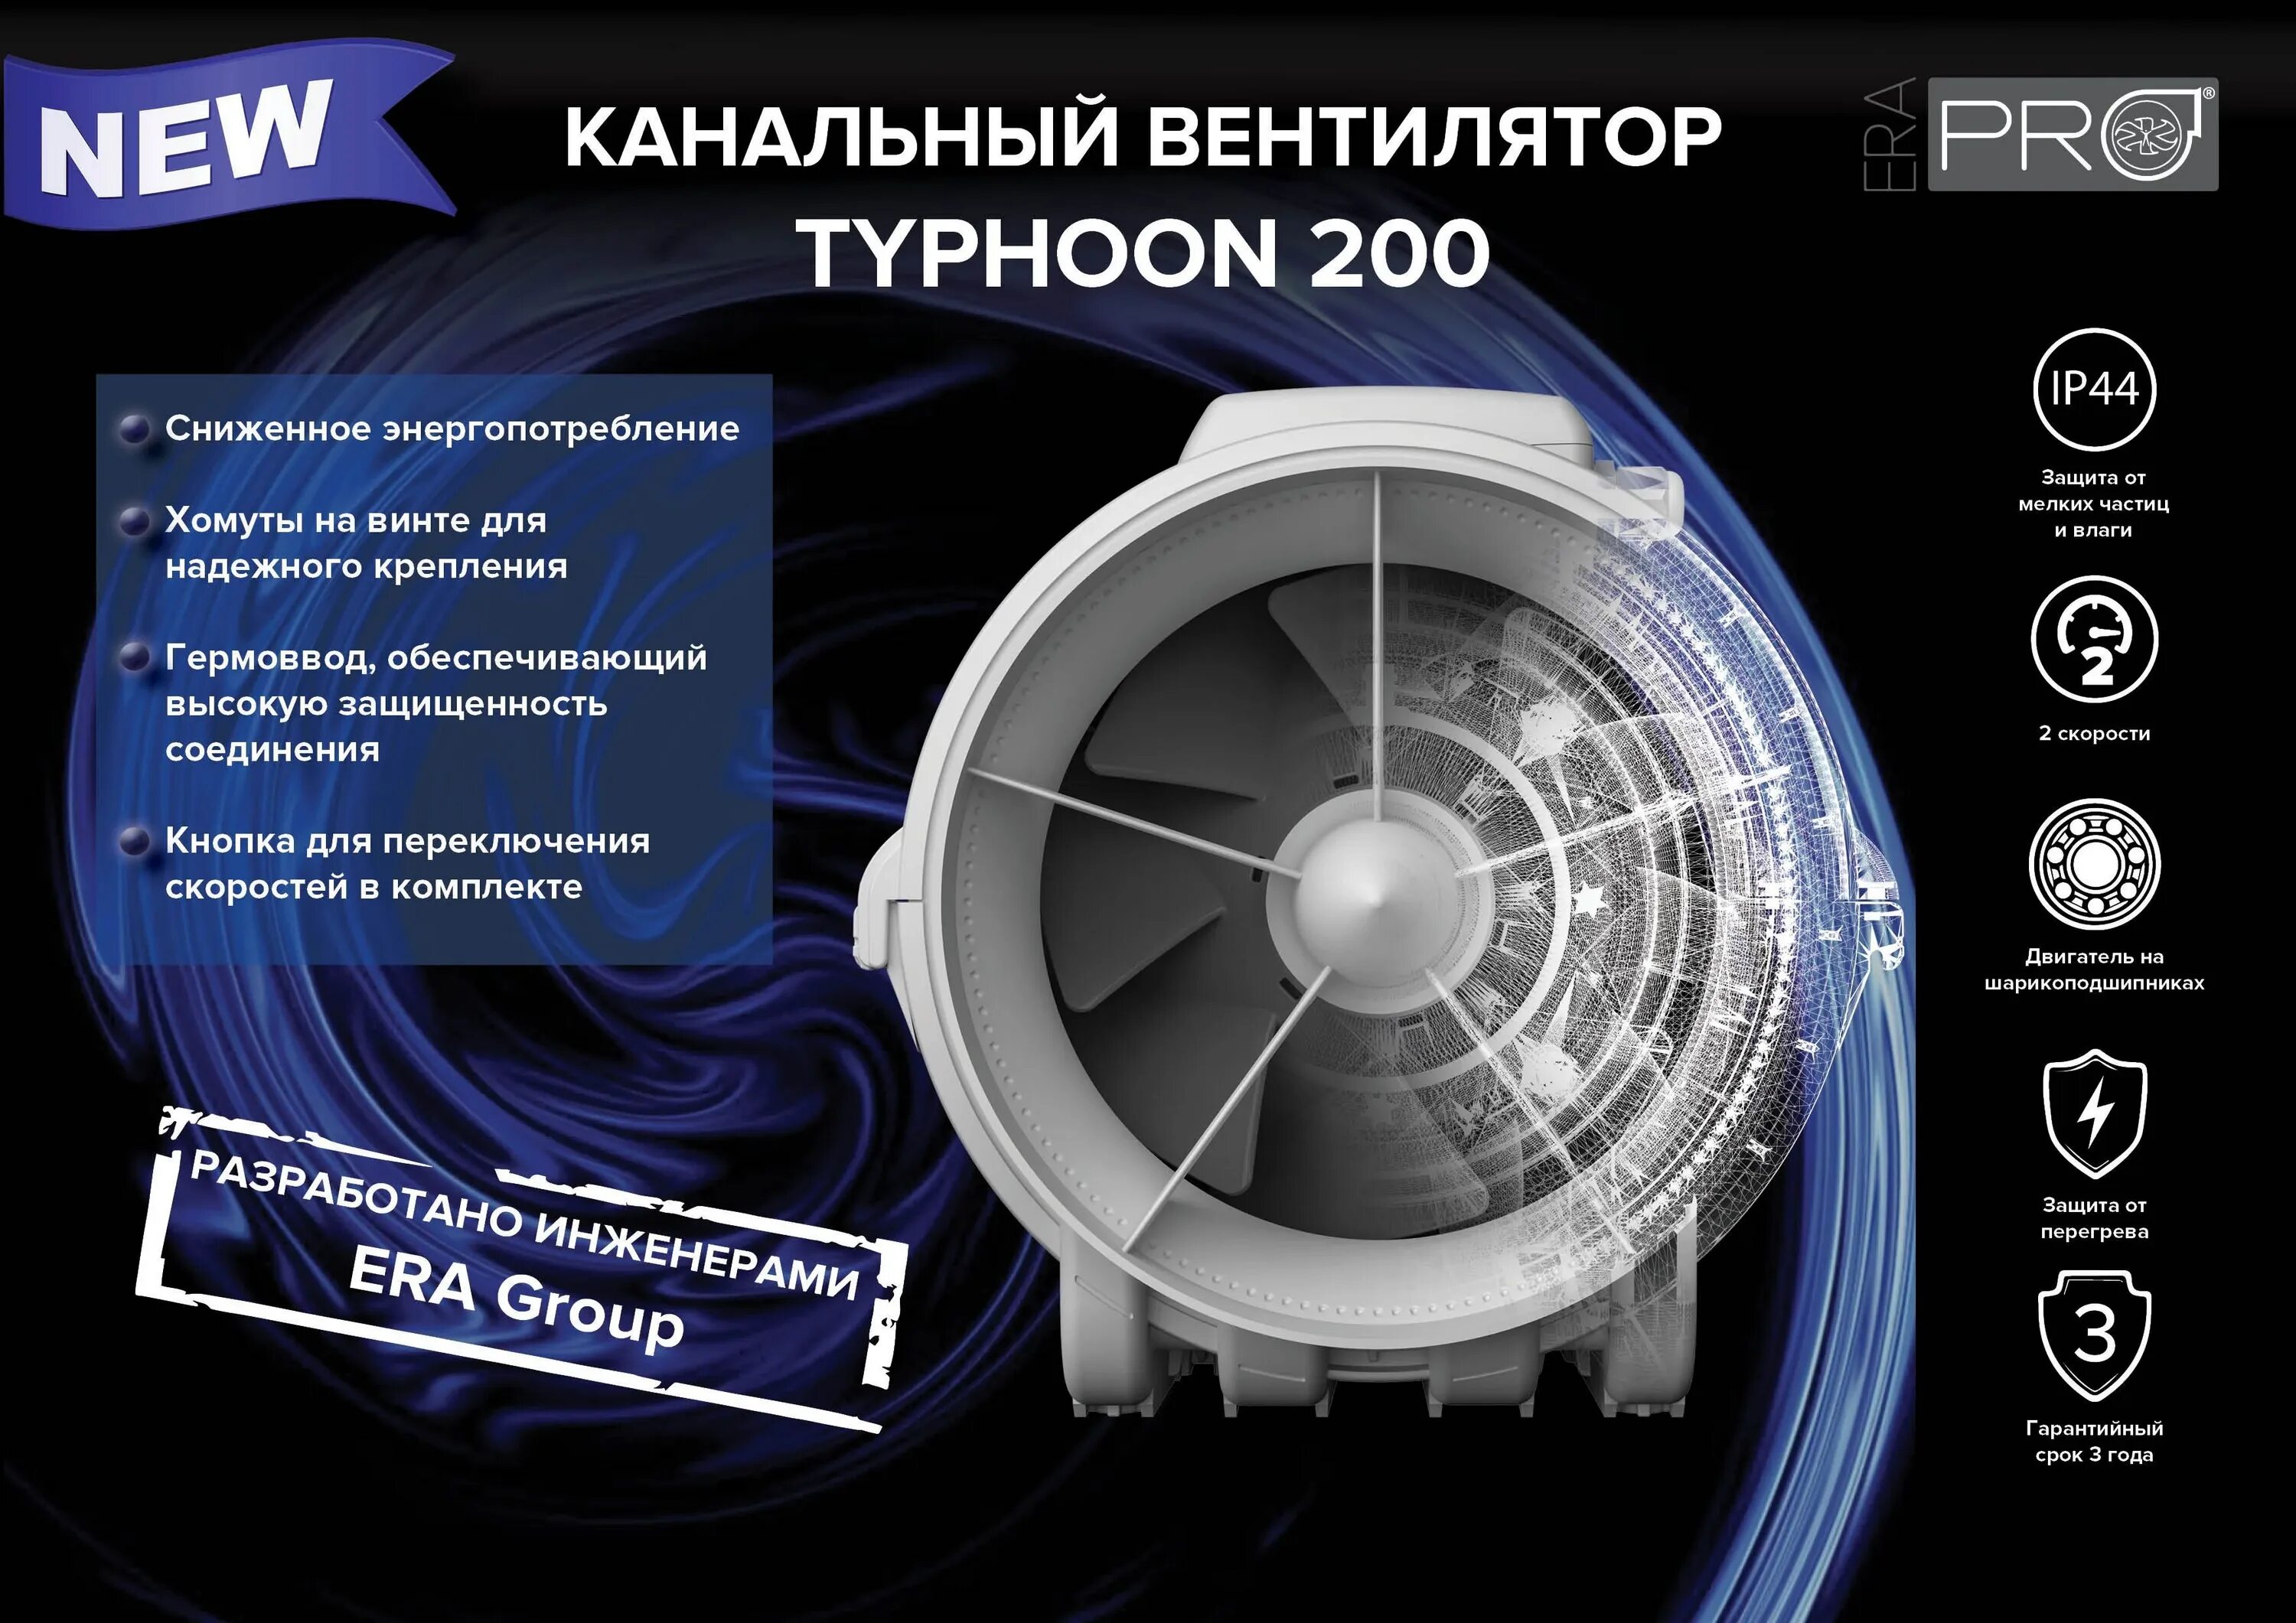 Typhoon 100 2sp. Тайфун 200 вентилятор. Канальный вентилятор Typhoon 200. Канальный вентилятор Тайфун 125. Вентилятор era Typhoon 100 2sp.